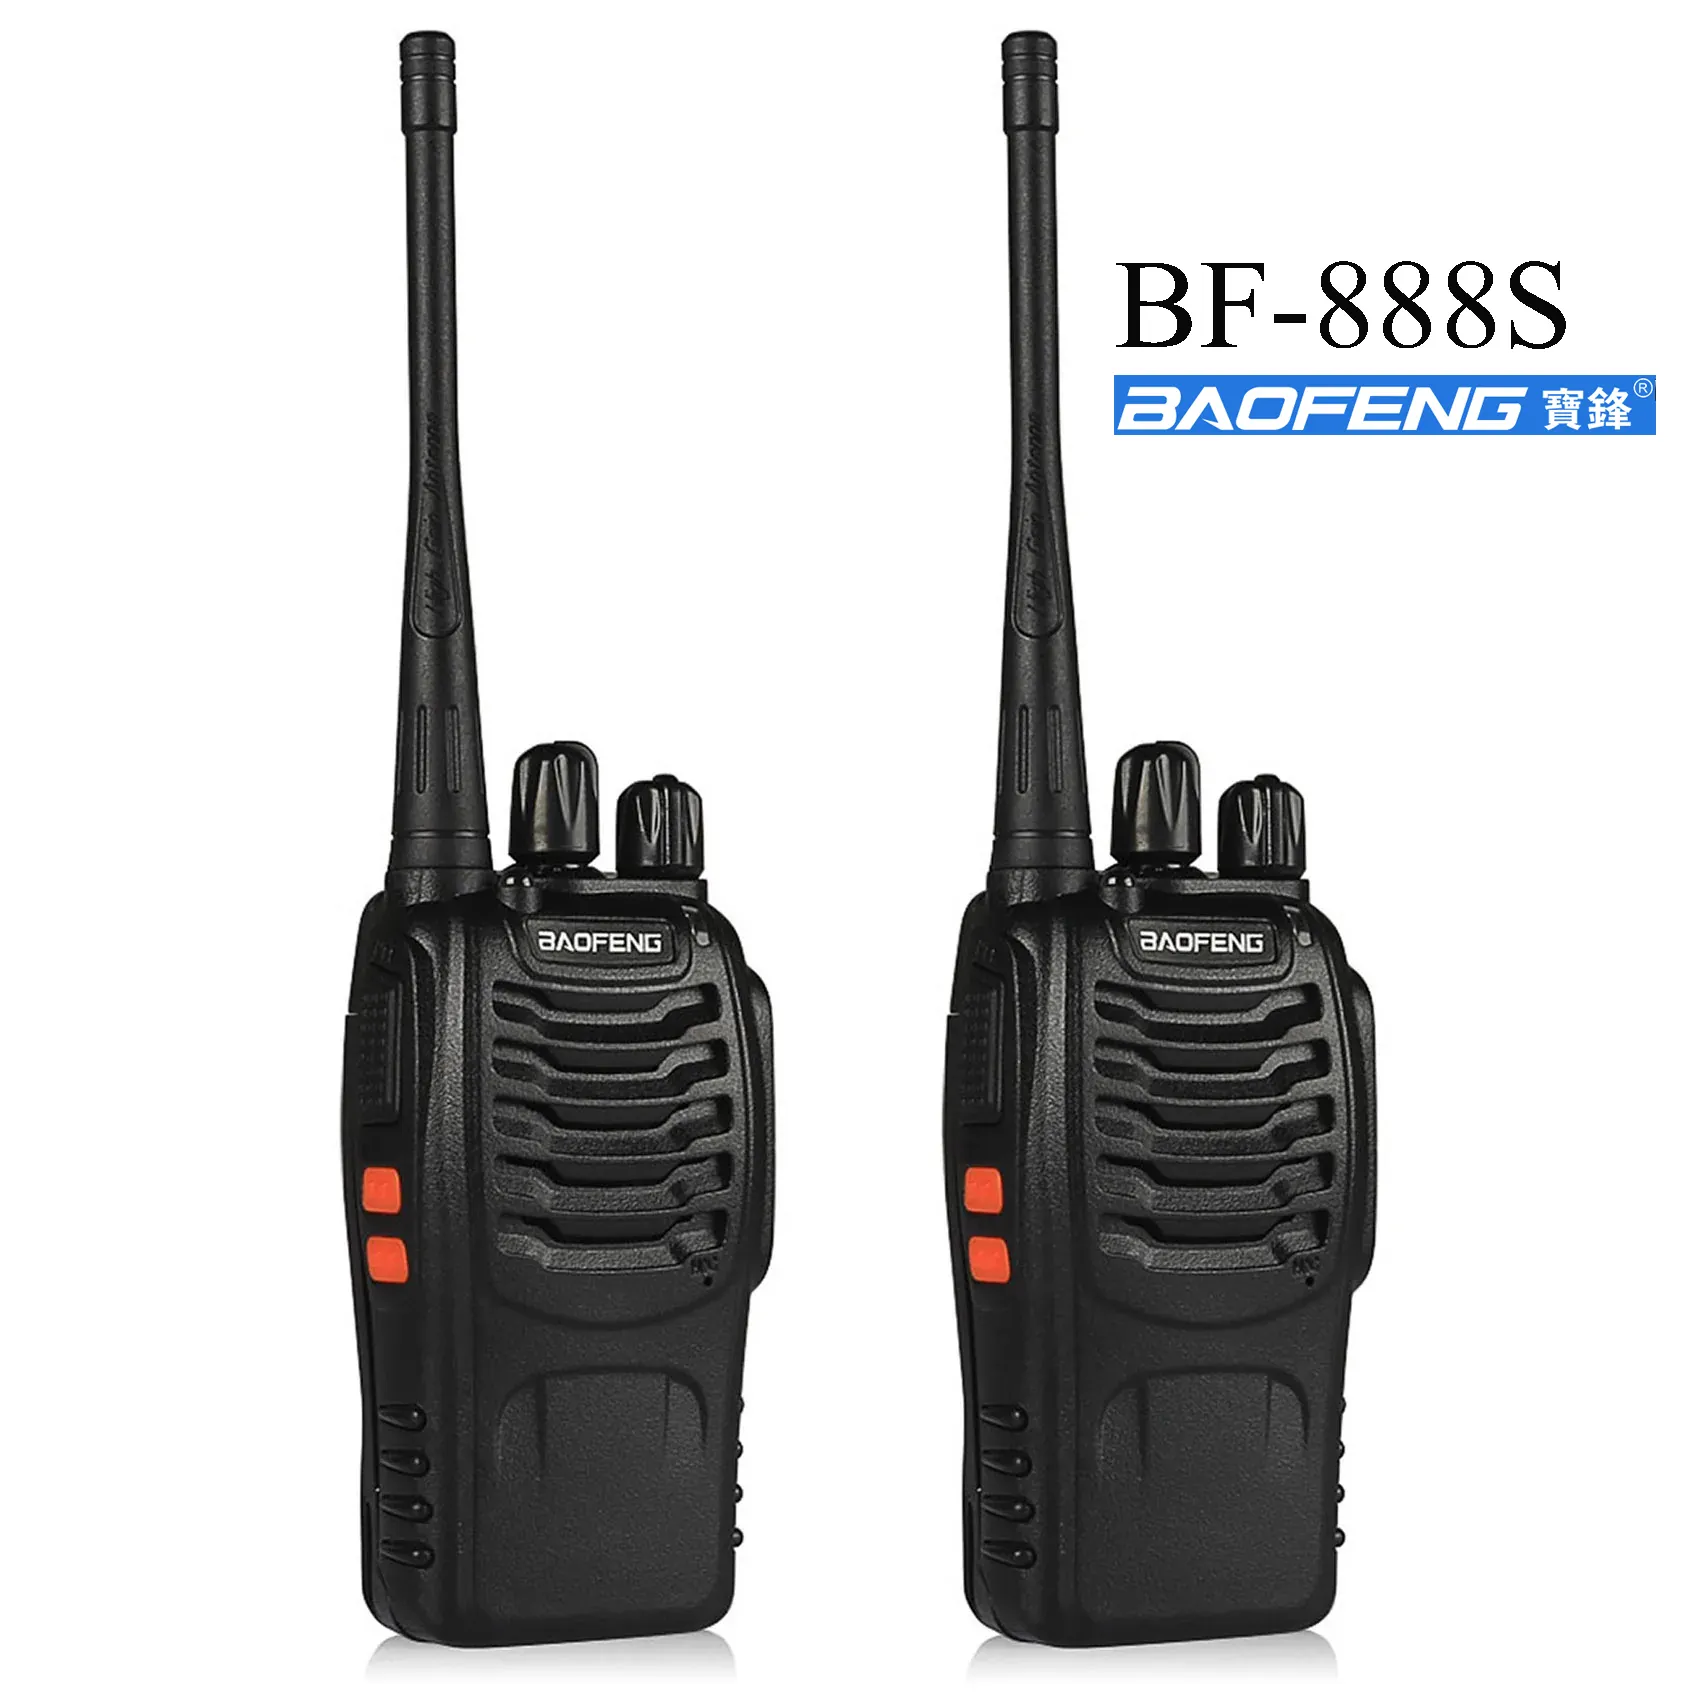 Baofeng BF-888S иди и болтай walkie talkie “иди и 888s UHF 400-470MHz канал Портативный двухстороннее Радио bf-888s ip67 водонепроницаемый радио